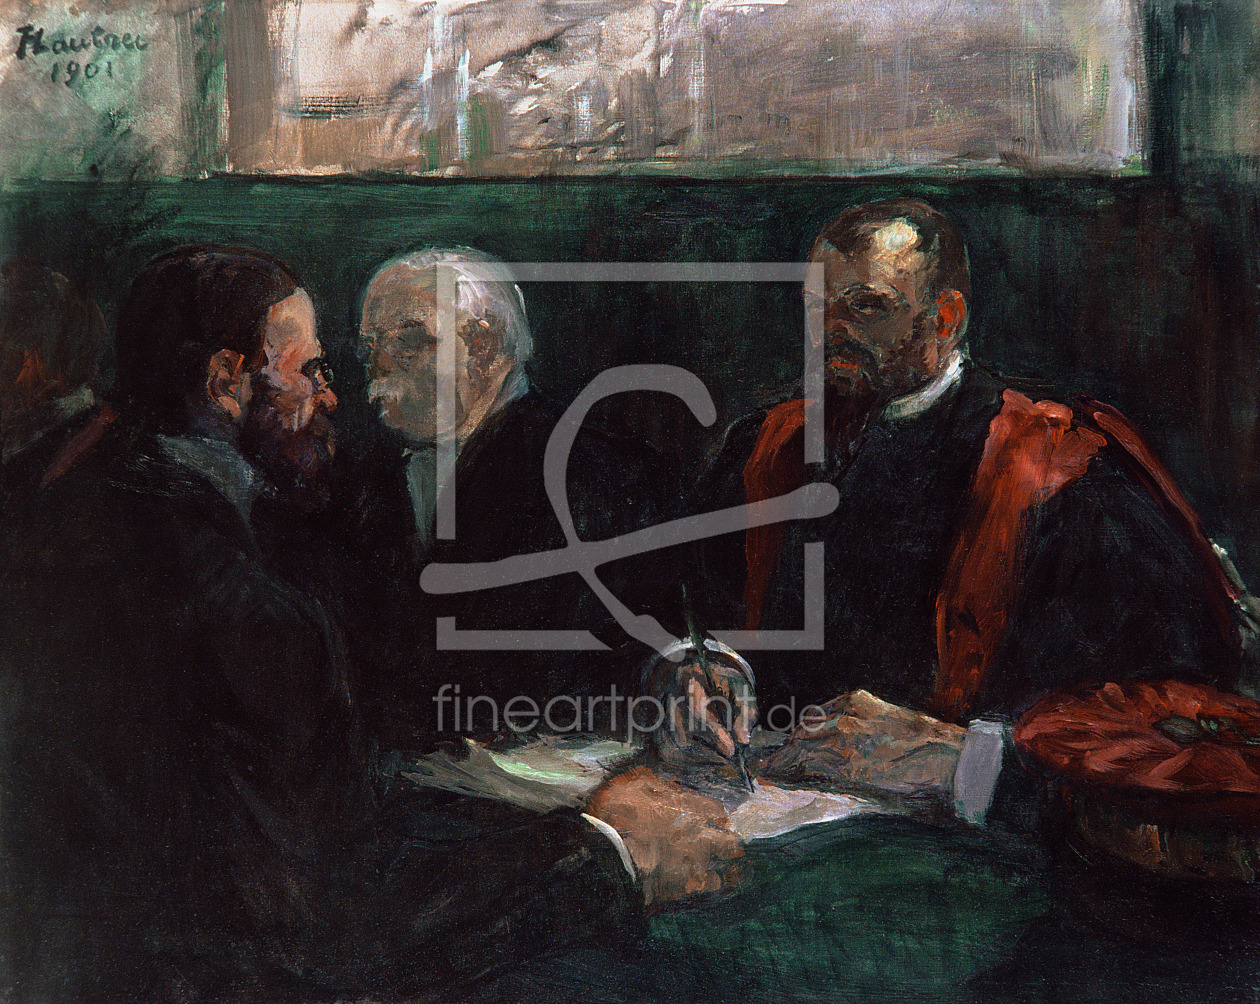 Bild-Nr.: 31002318 Examination at the Faculty of Medicine, 1901 erstellt von Toulouse-Lautrec, Henri de